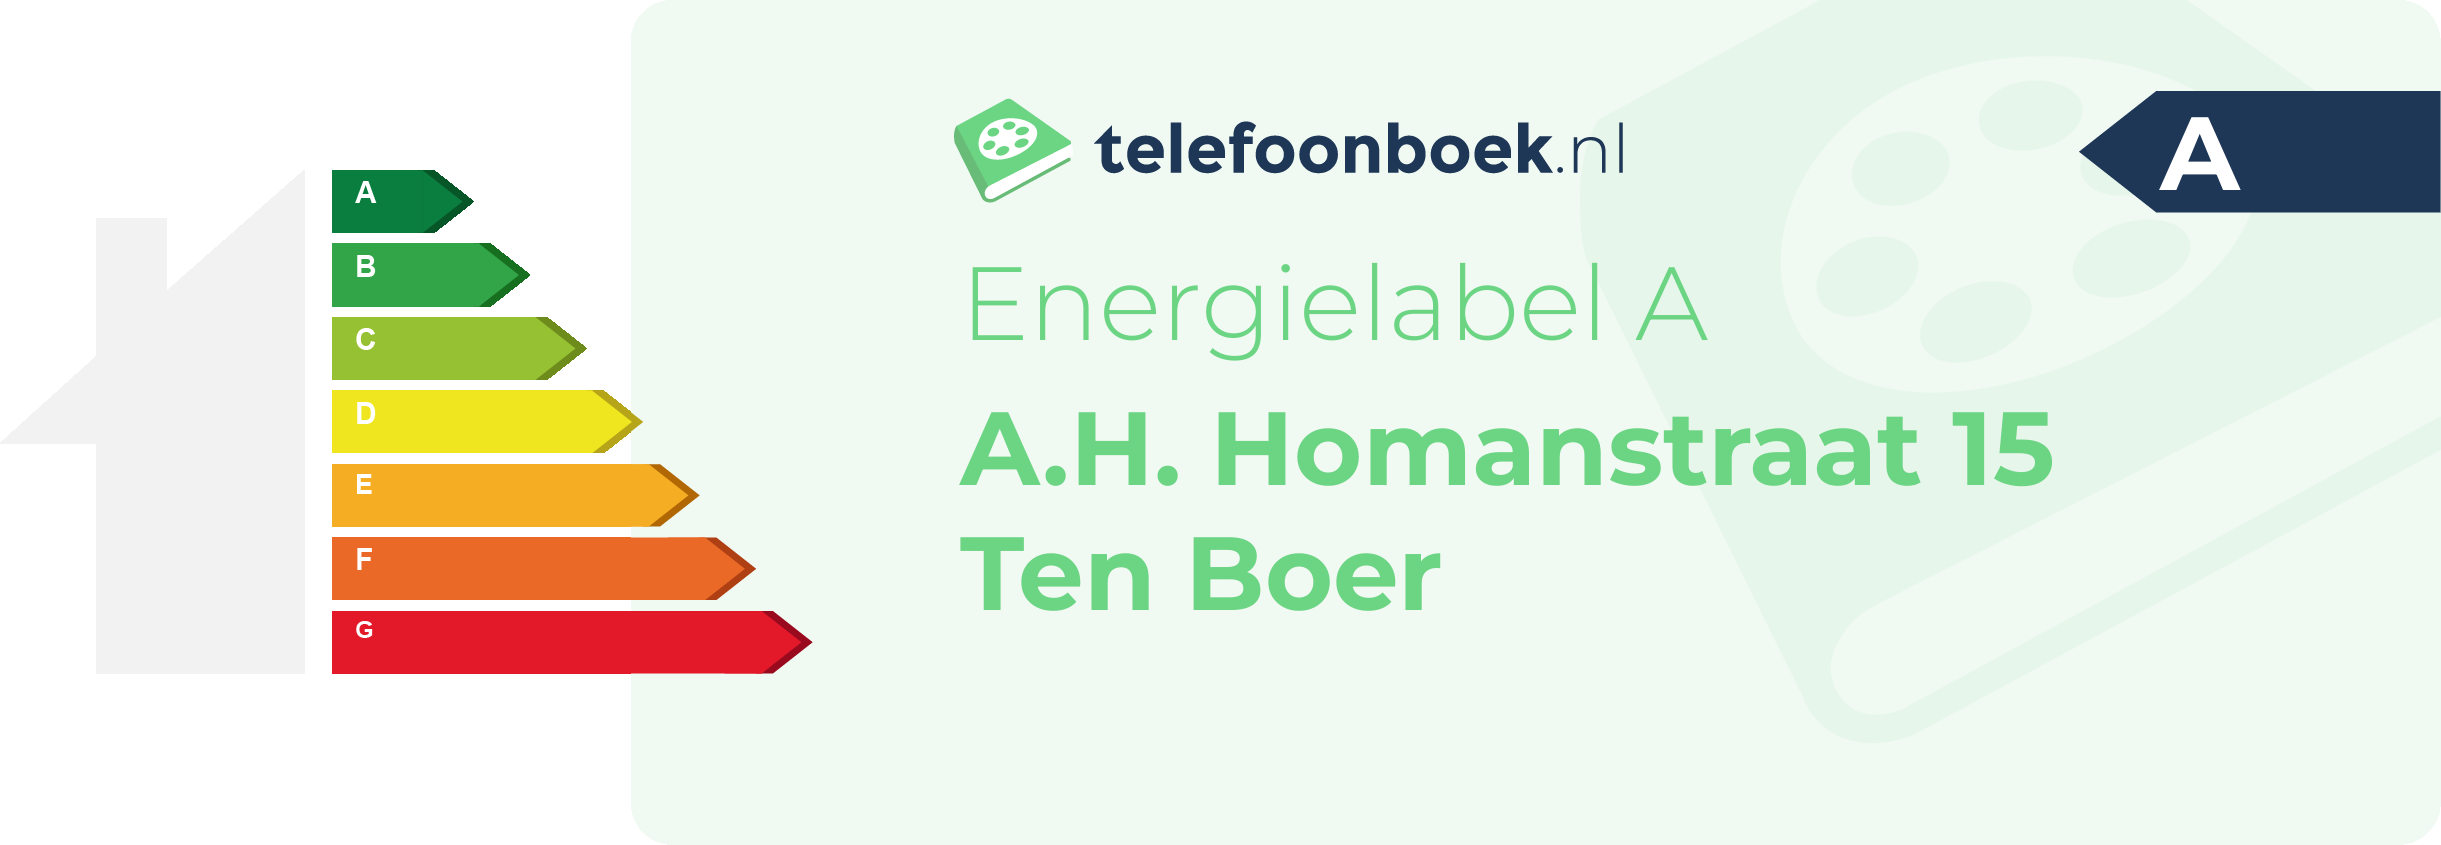 Energielabel A.H. Homanstraat 15 Ten Boer